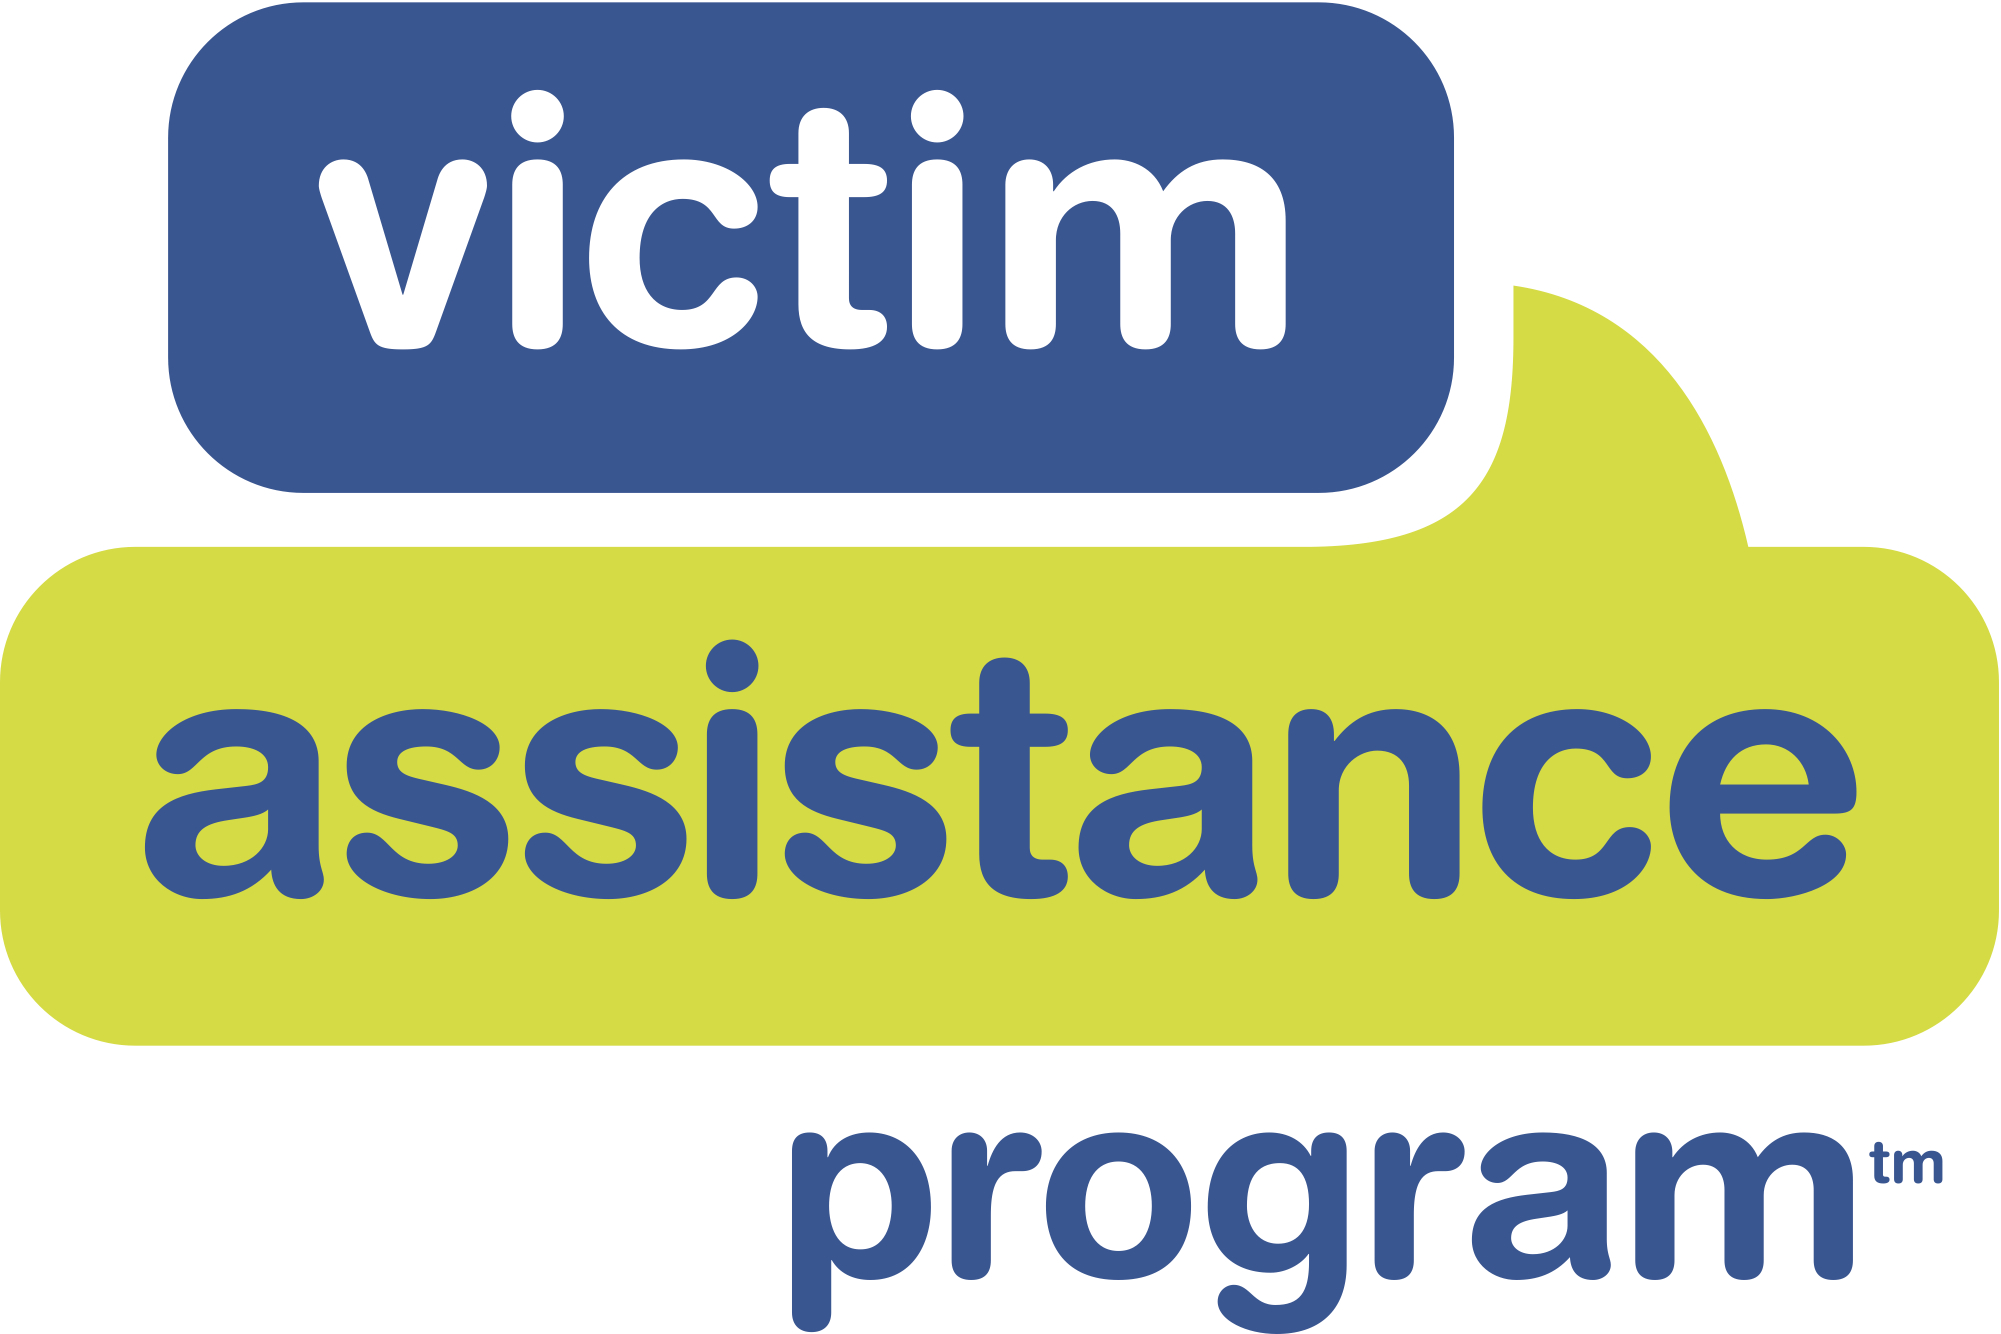 Victim Assistance Program Inc. logo